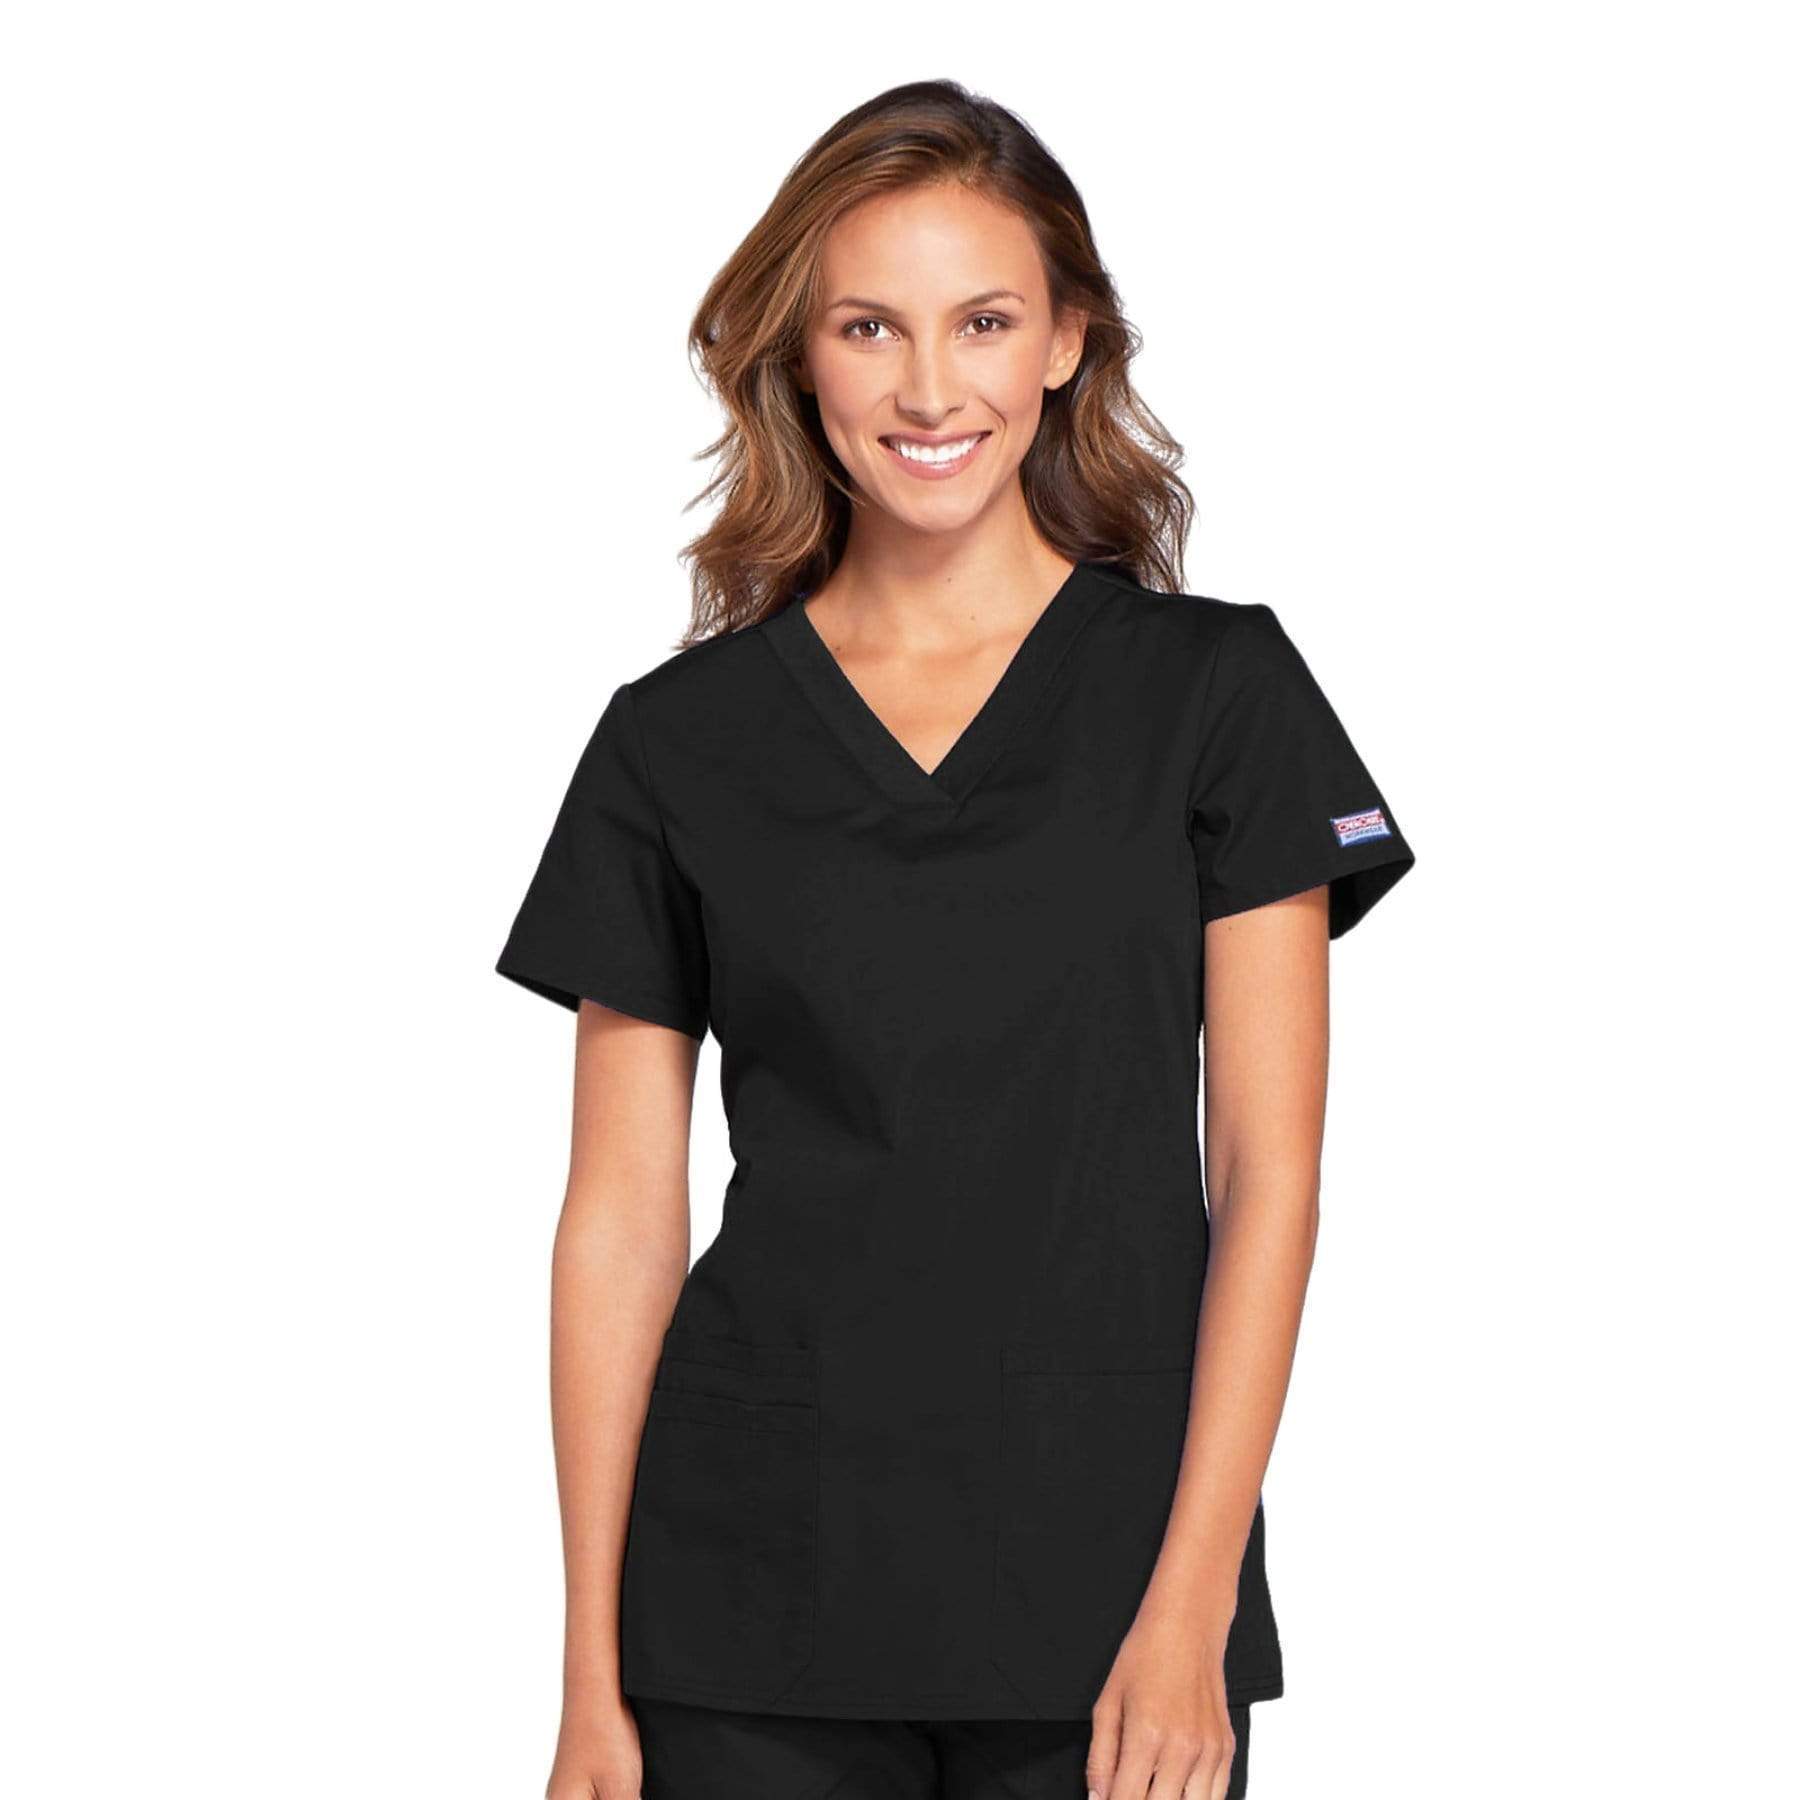 Black jogger scrubs  Linked  Stylish scrubs Medical scrubs fashion  Medical scrubs outfit